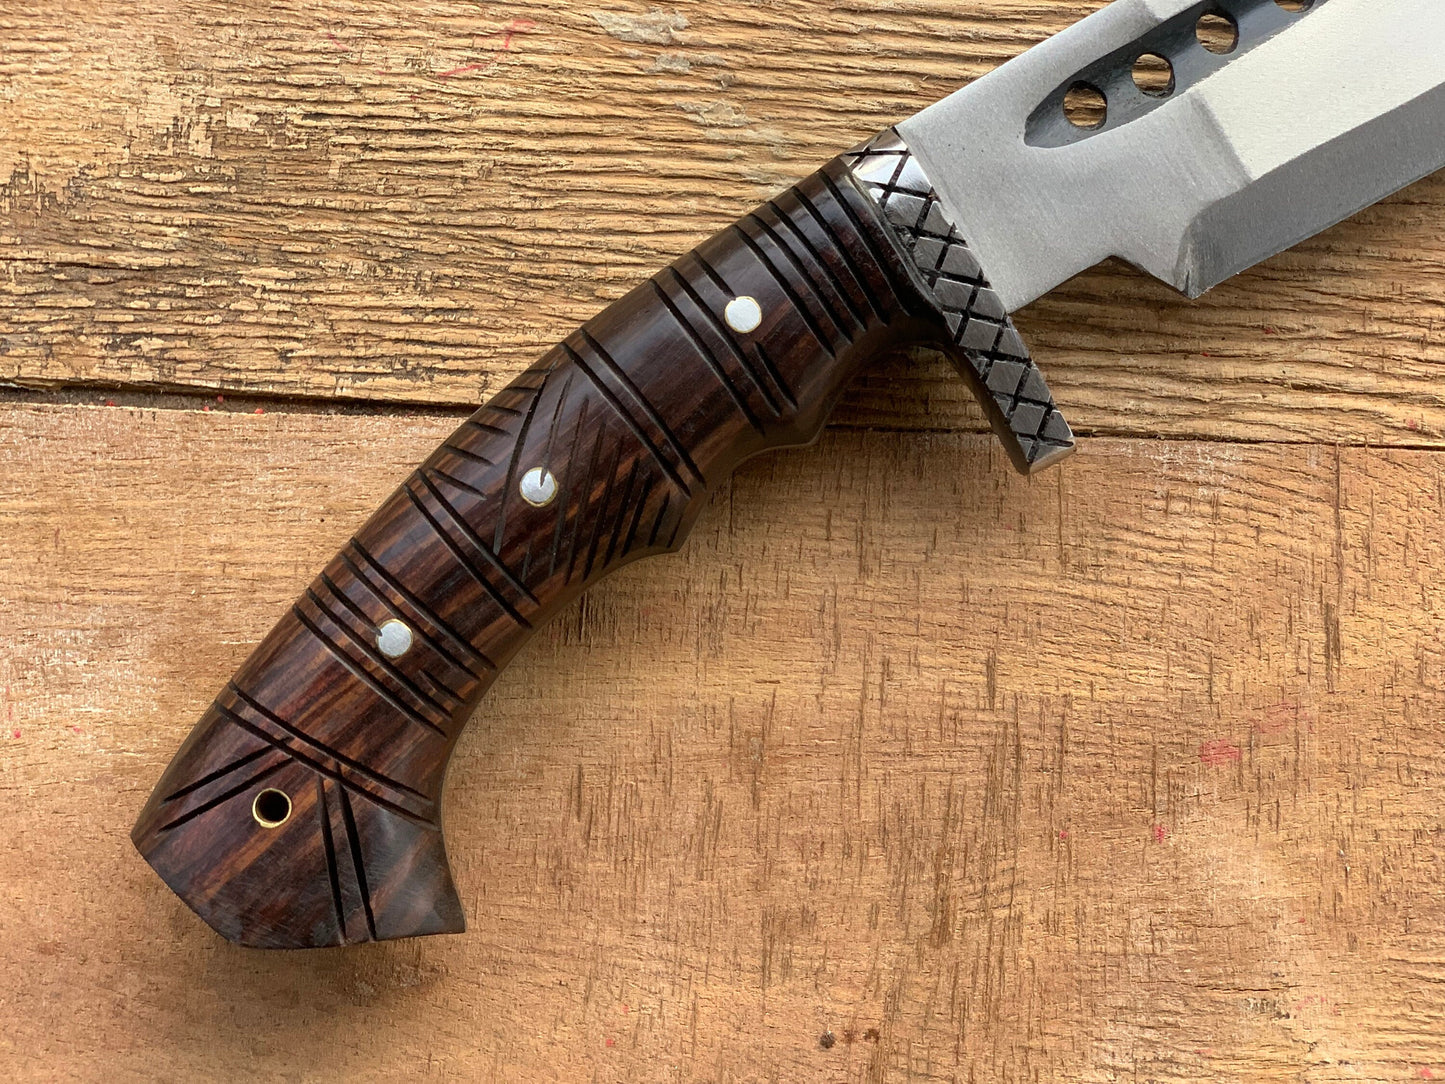 Gurkha Nepal, Hand- Forged 18” Blade SAEX Knife Full Tang High Temper, Sharp Khukuri with Leather Sheath